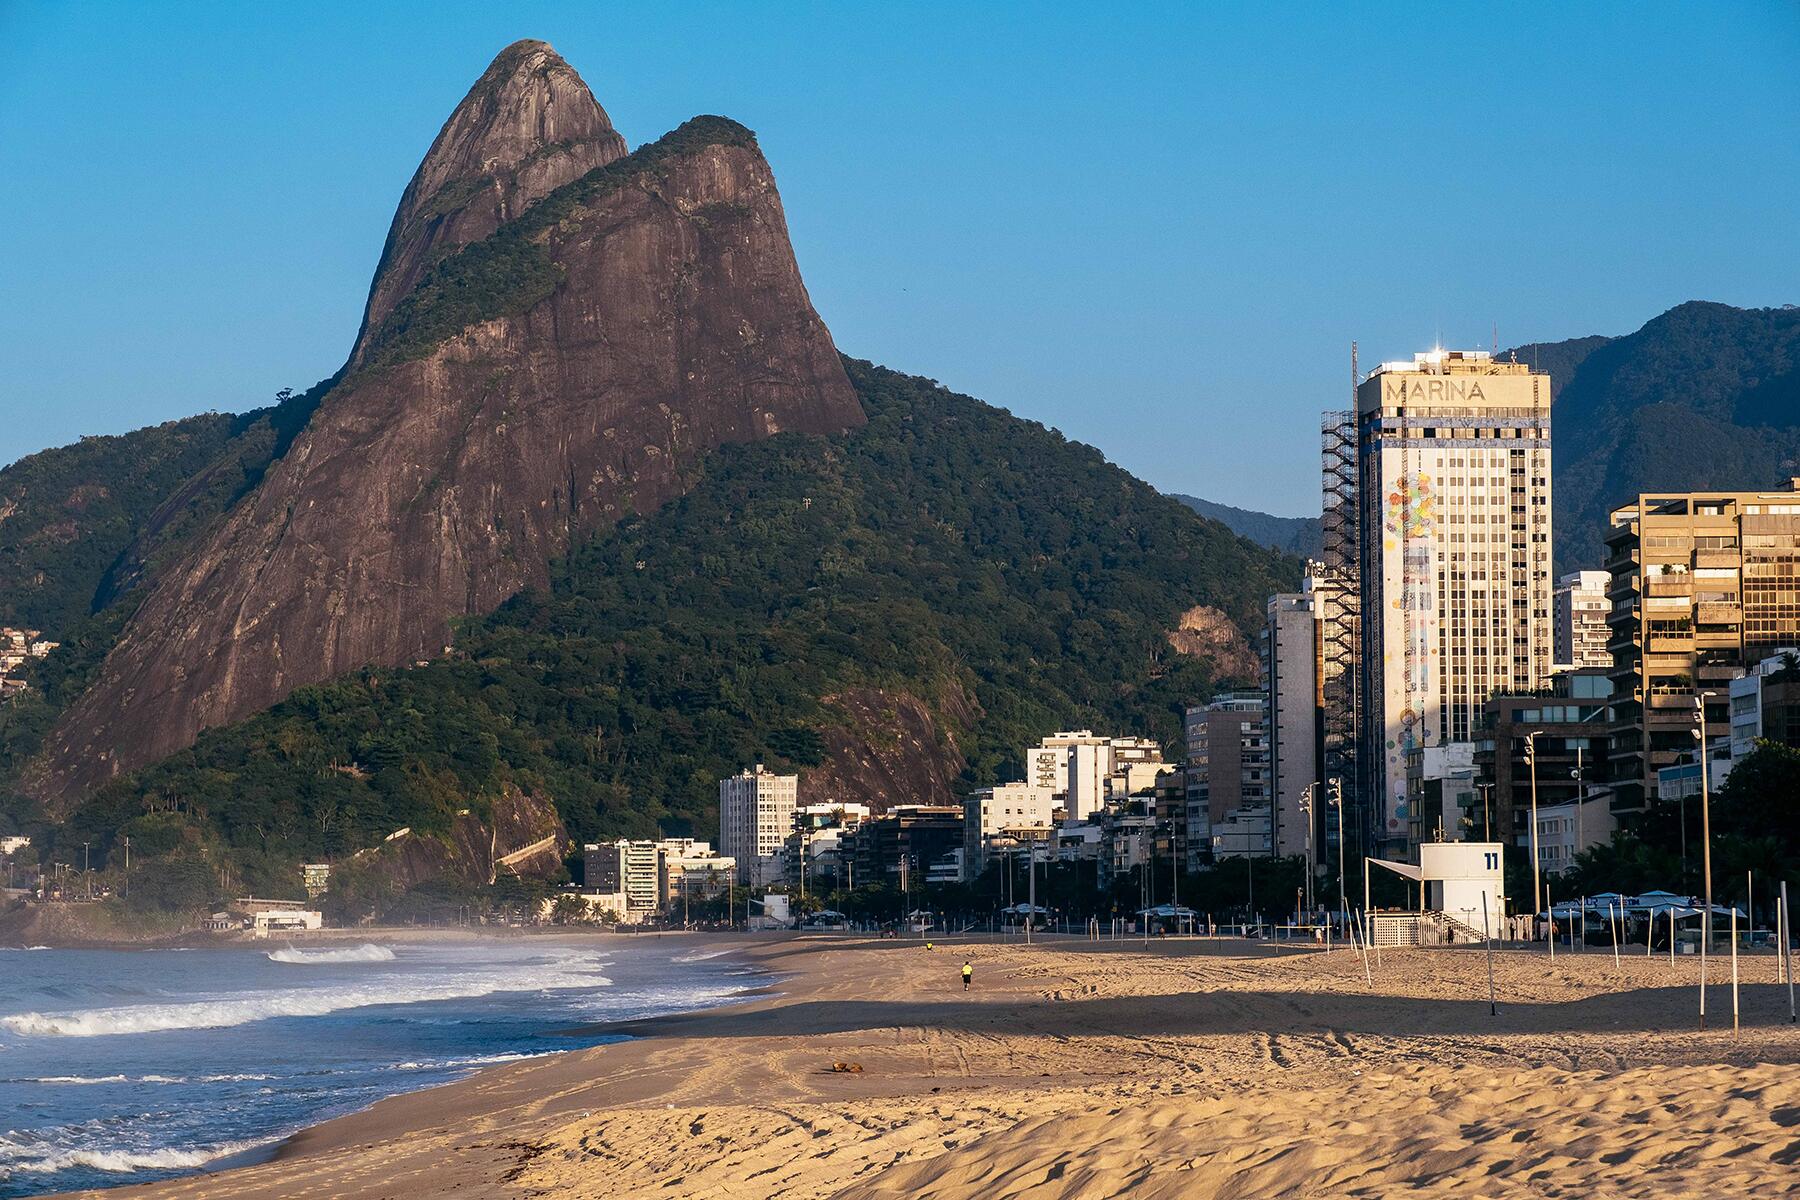 Rio de Janeiro announces curfew as Brazil battles brutal COVID wave